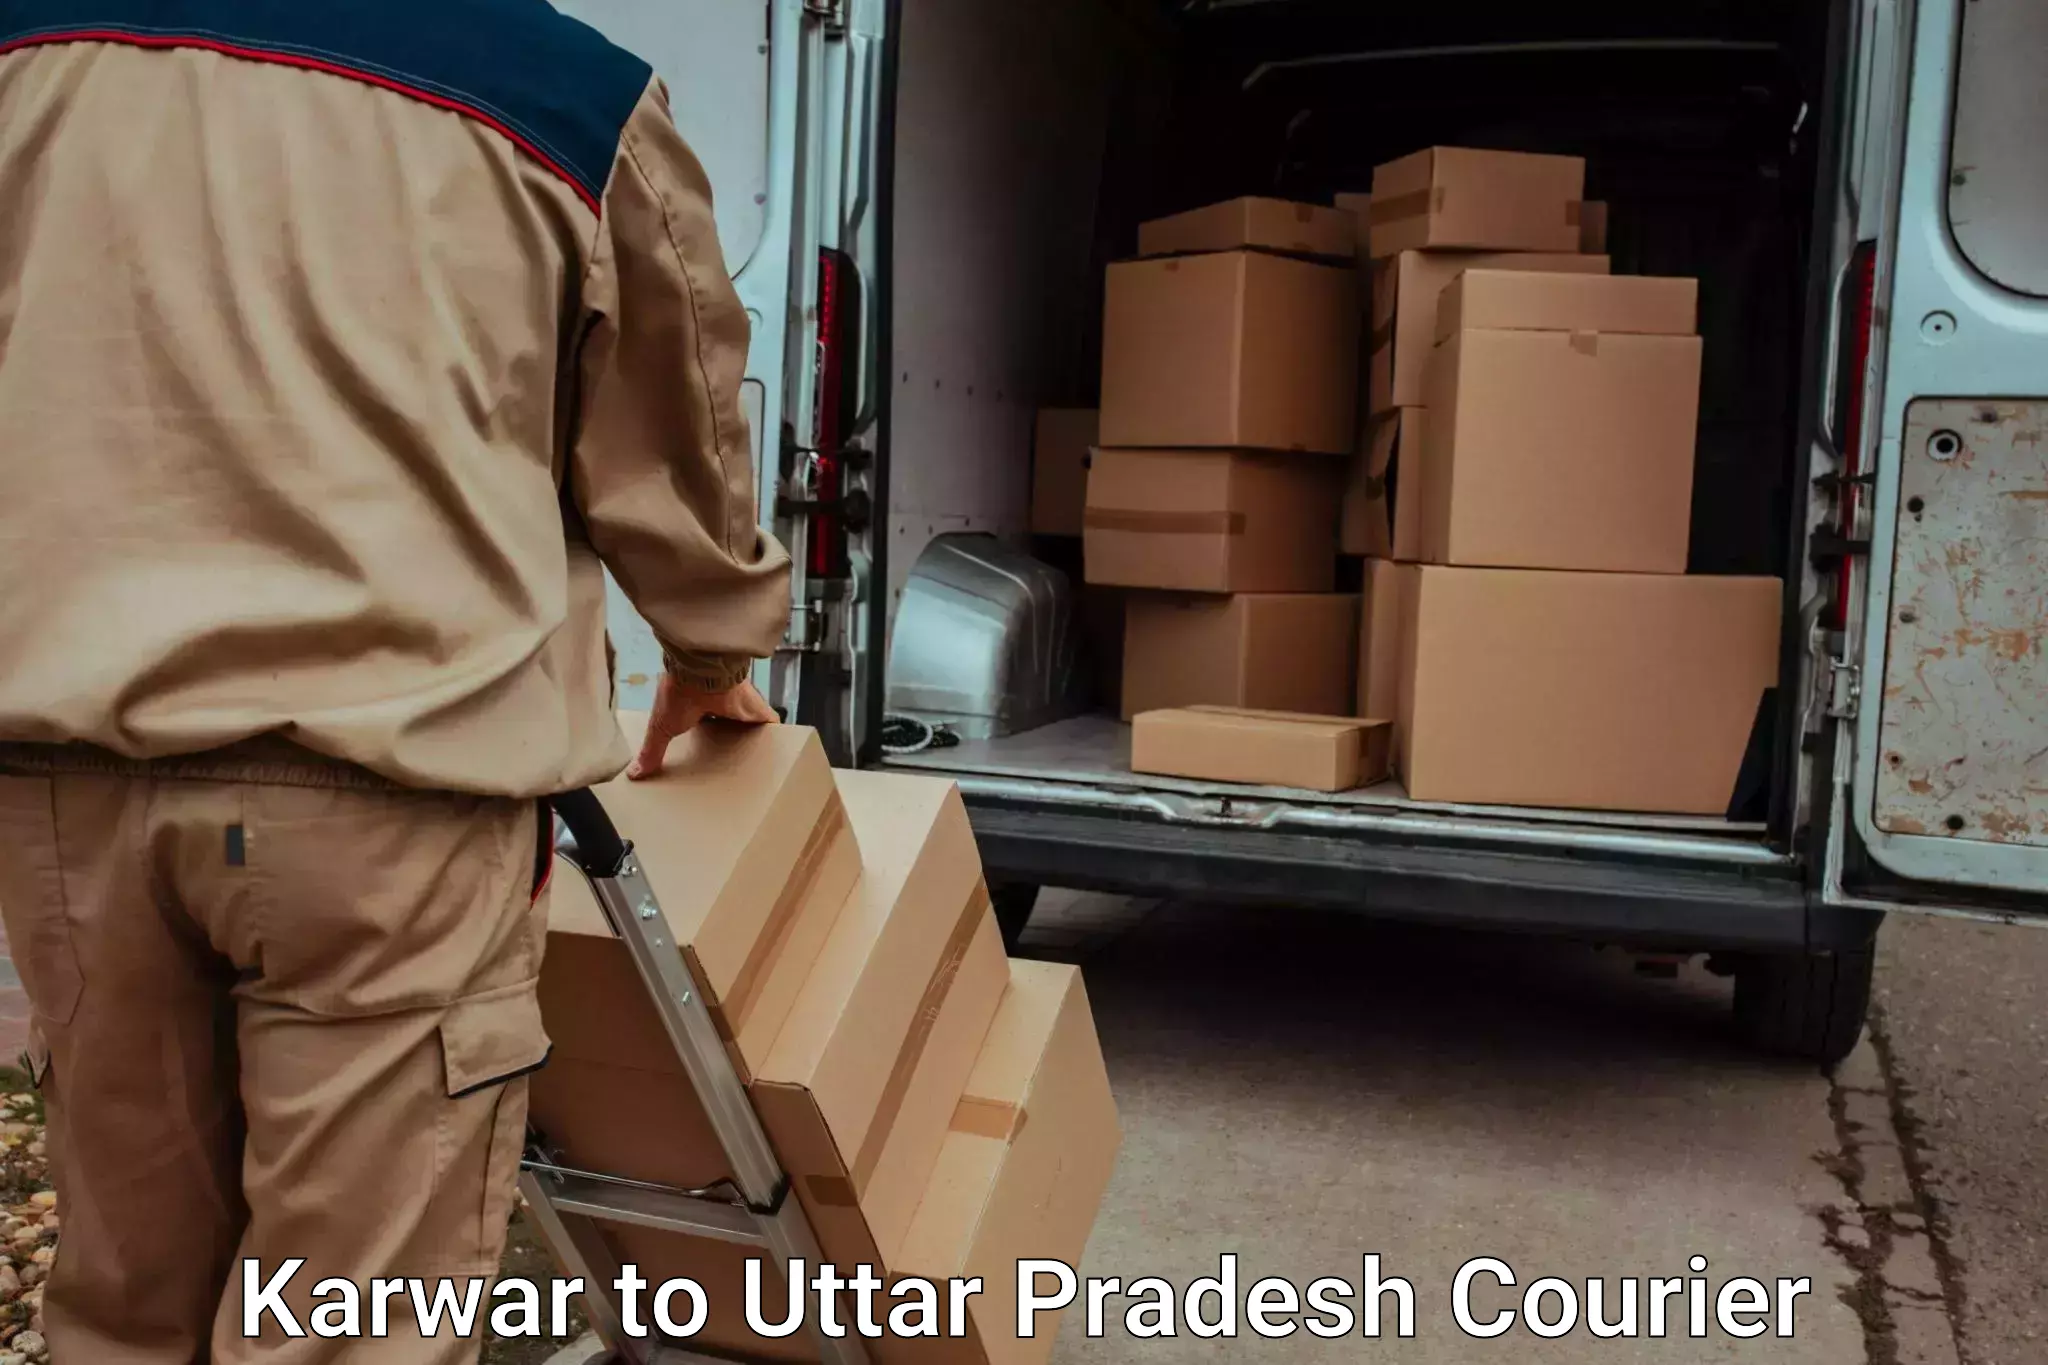 Luggage storage and delivery Karwar to Ghorawal